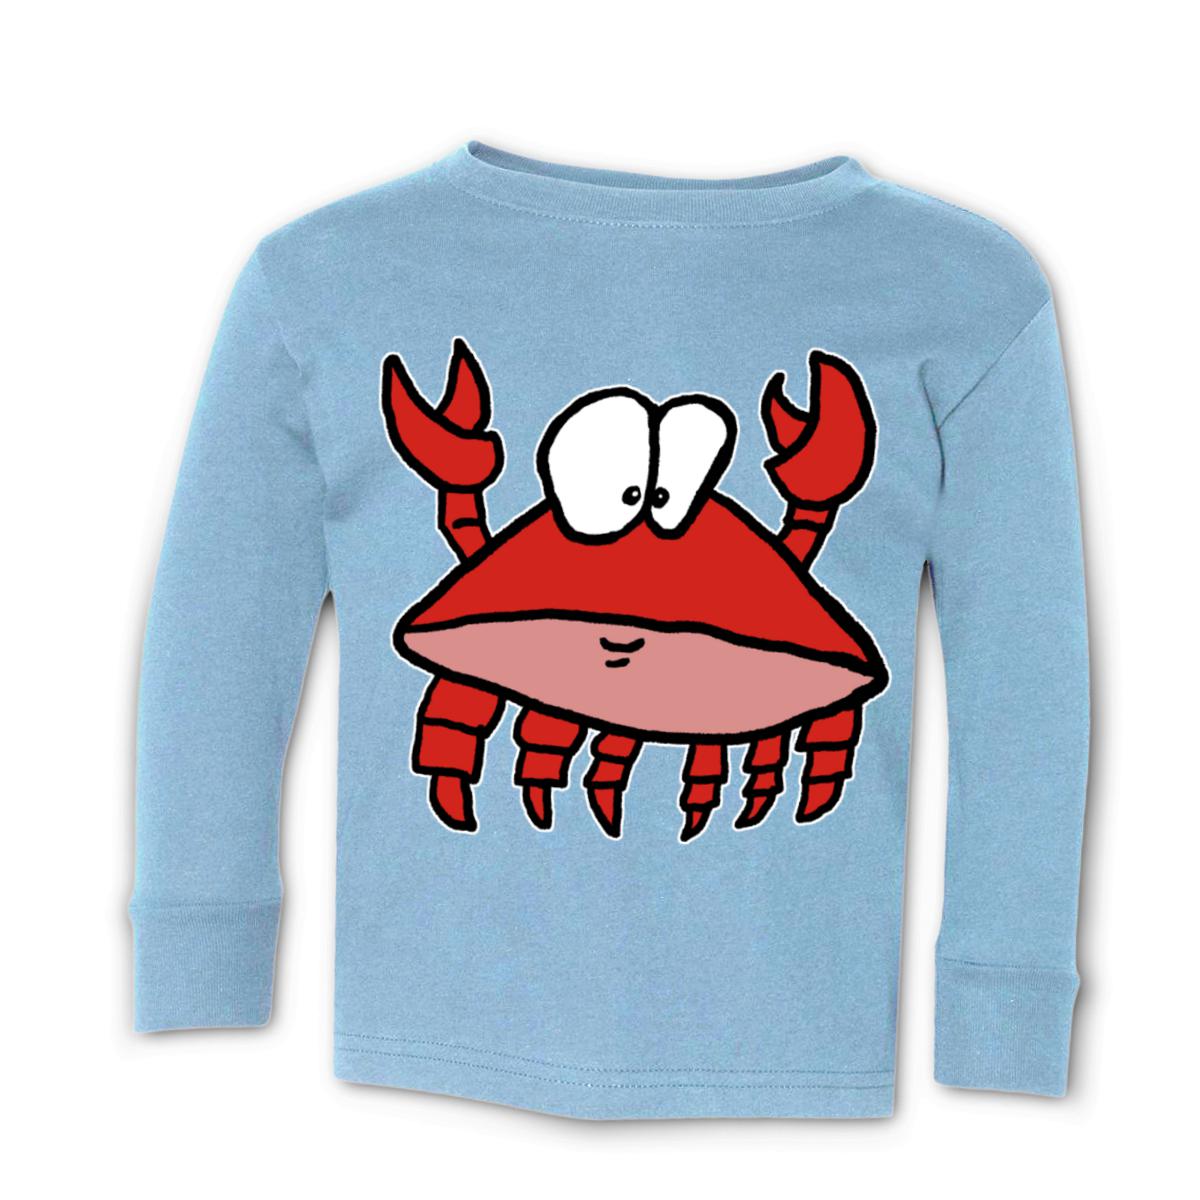 Crab 2.0 Kid's Long Sleeve Tee Small light-blue